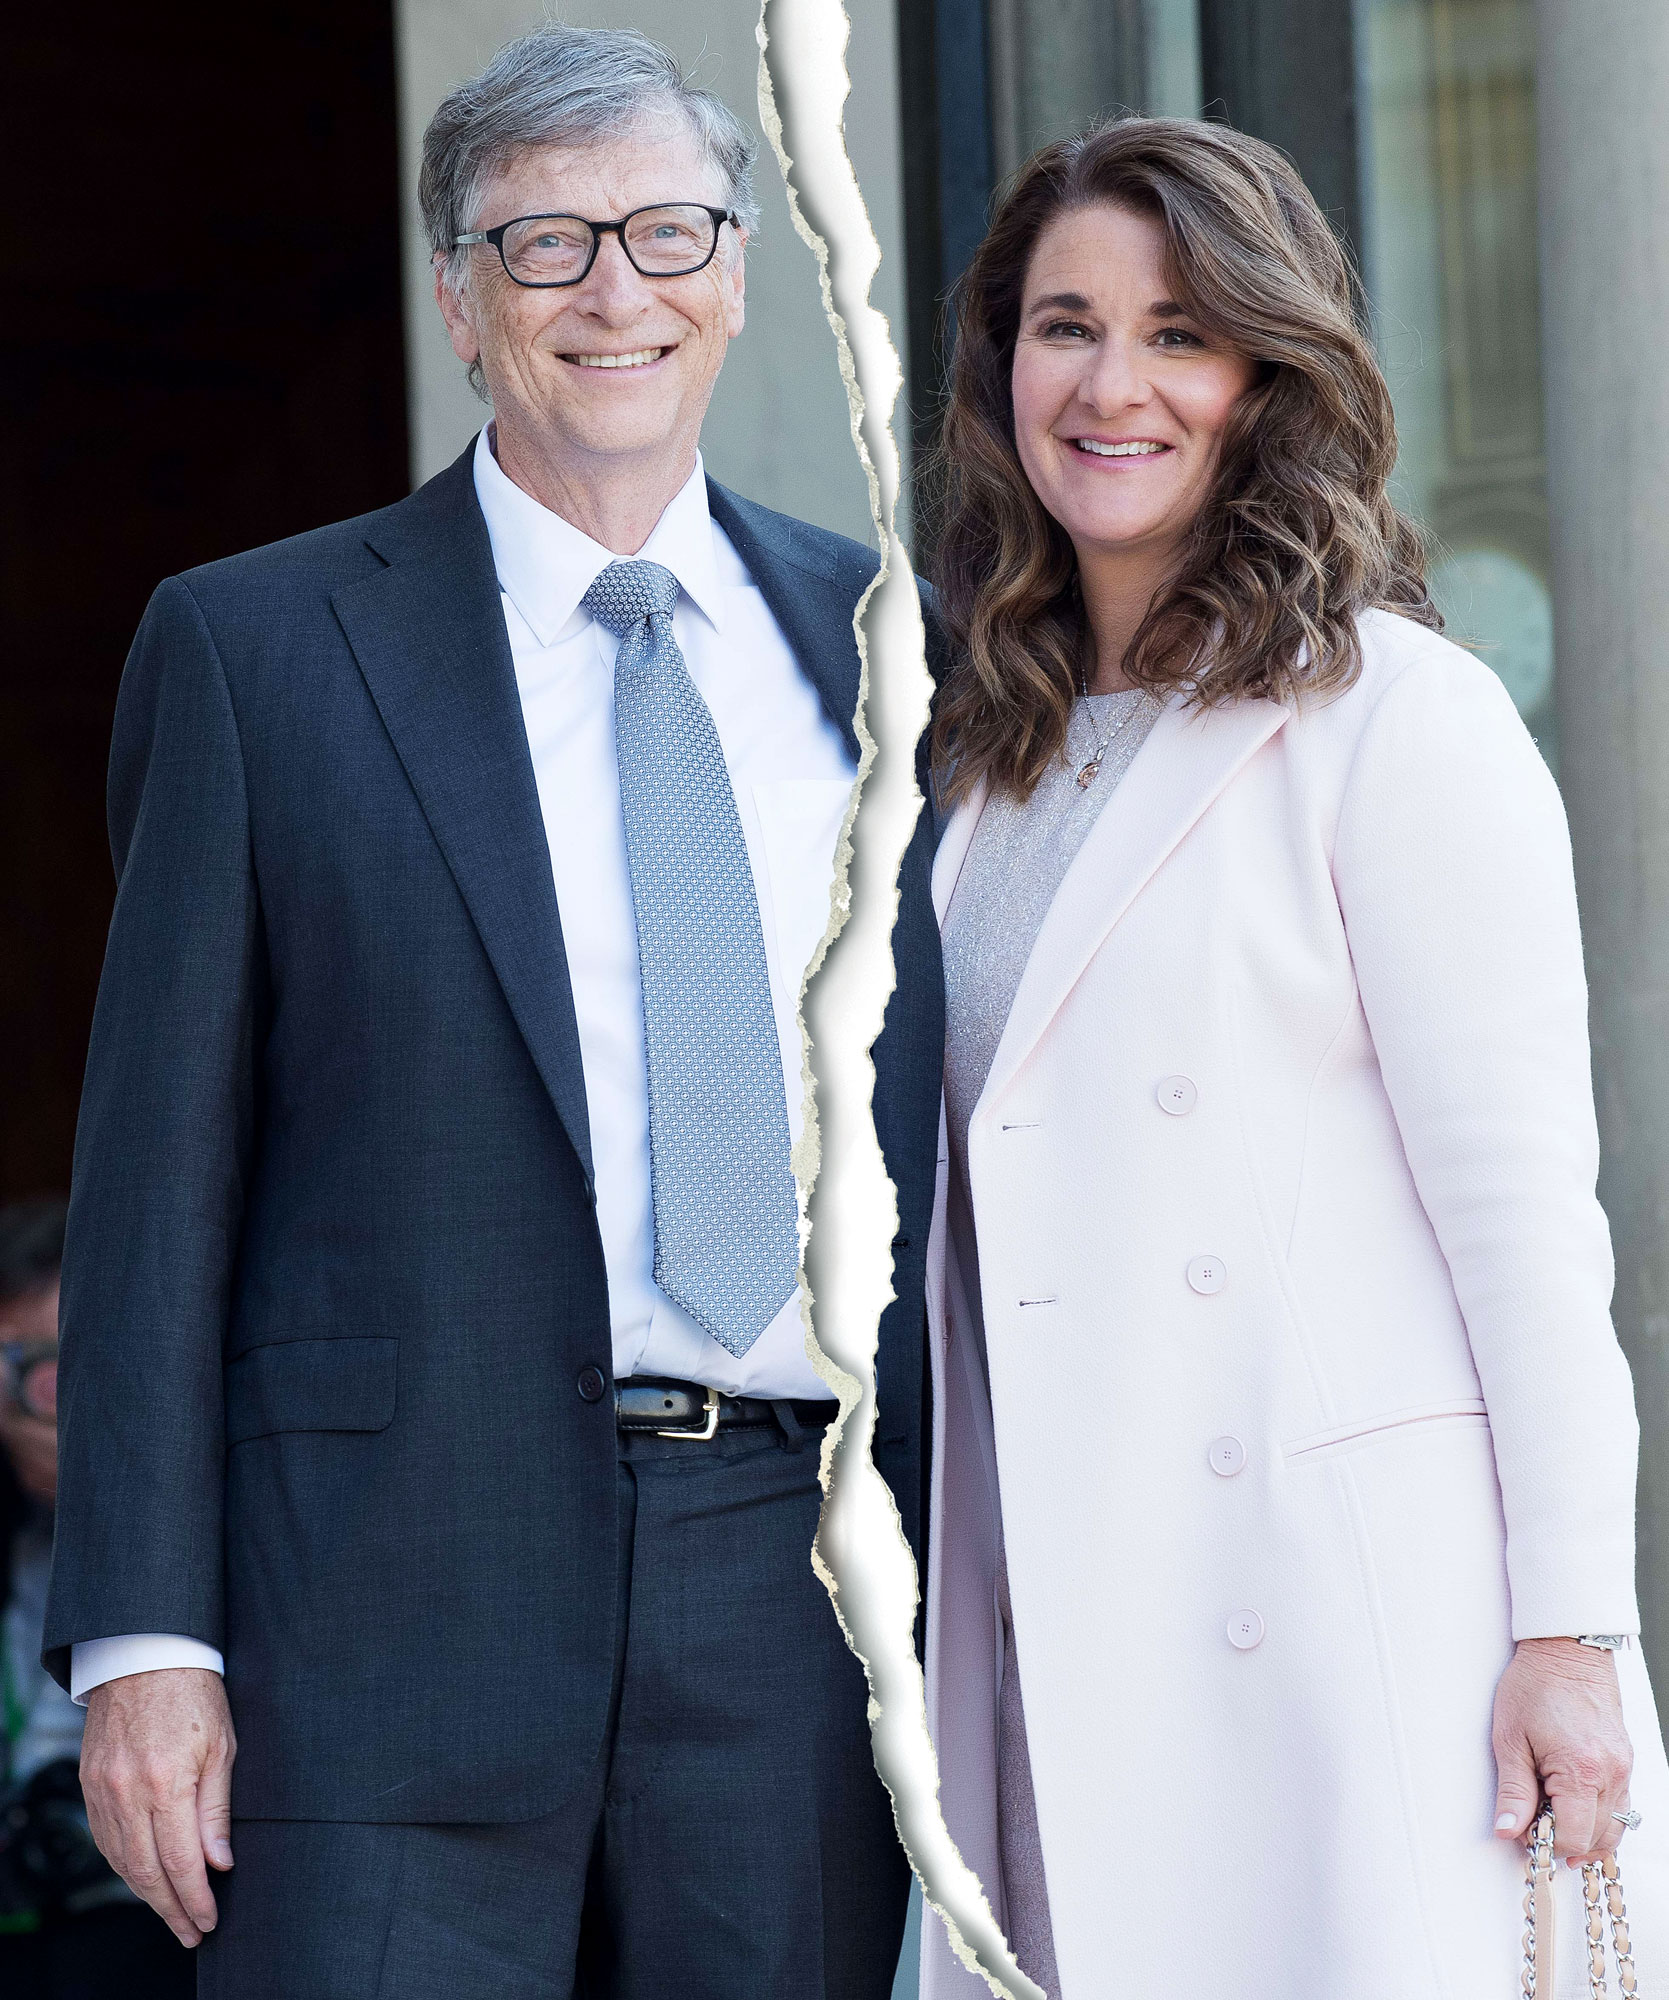 Gates why divorce bill Bill Gates'